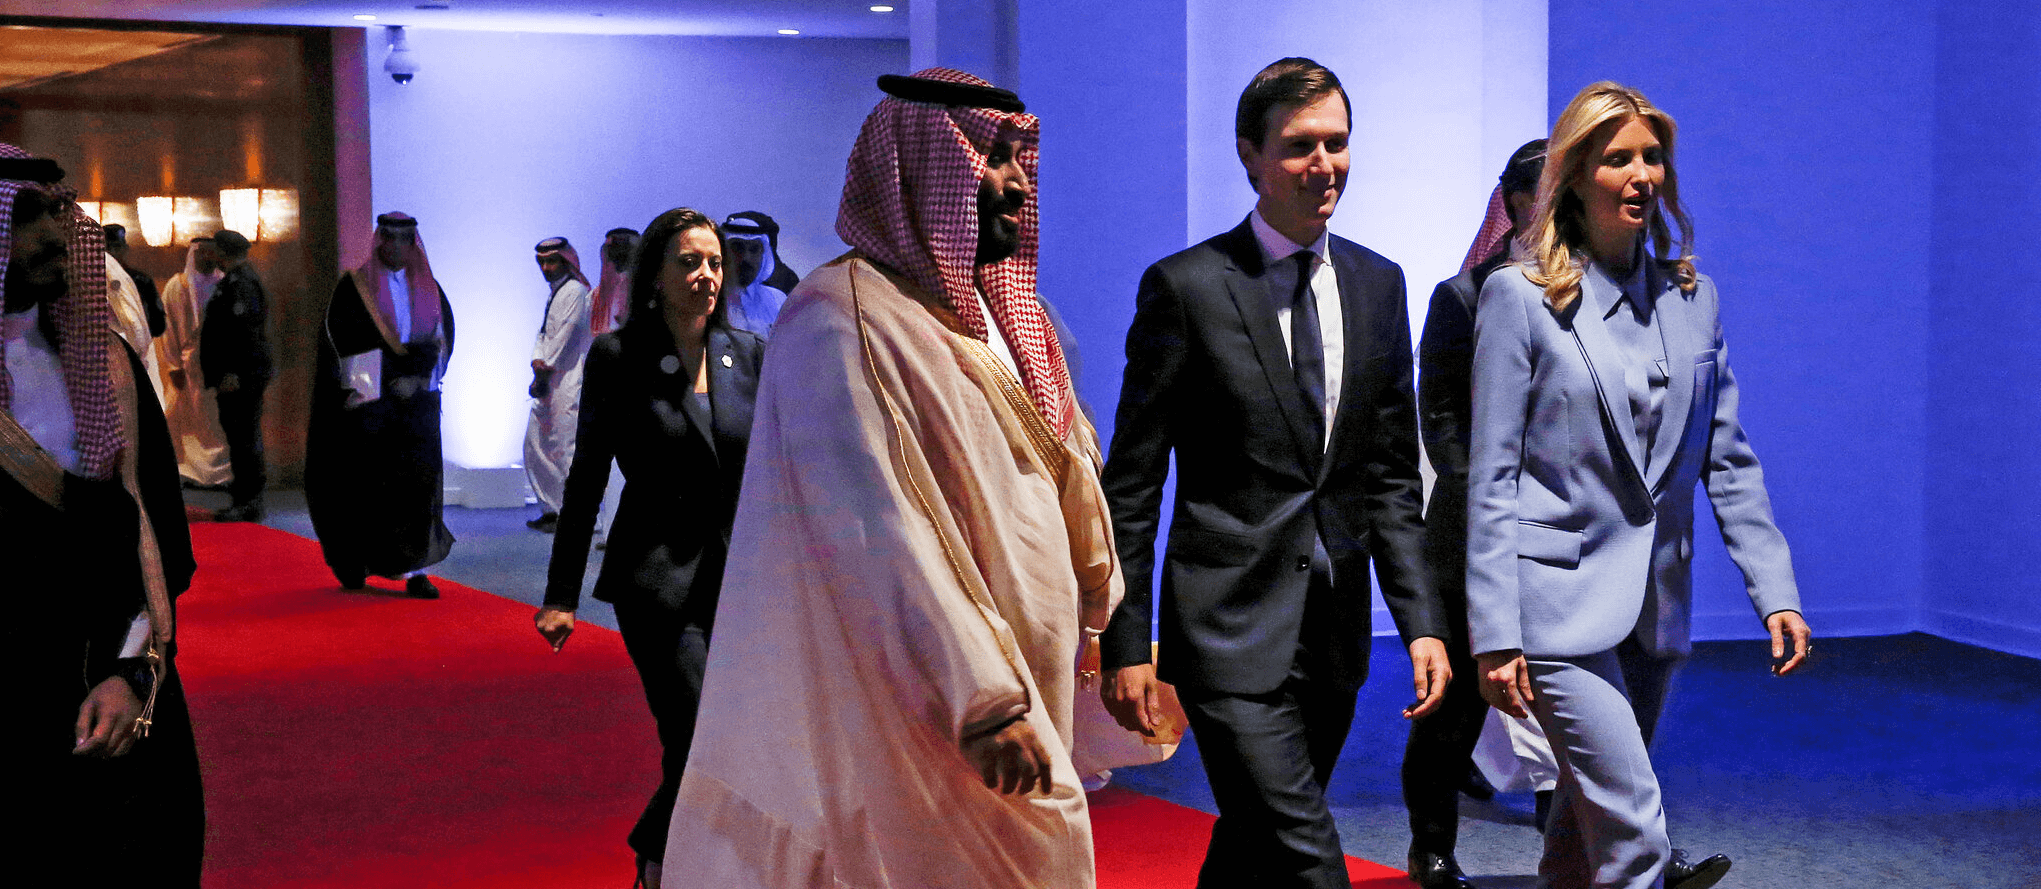 Kushner saudi relaciones vivirendubai